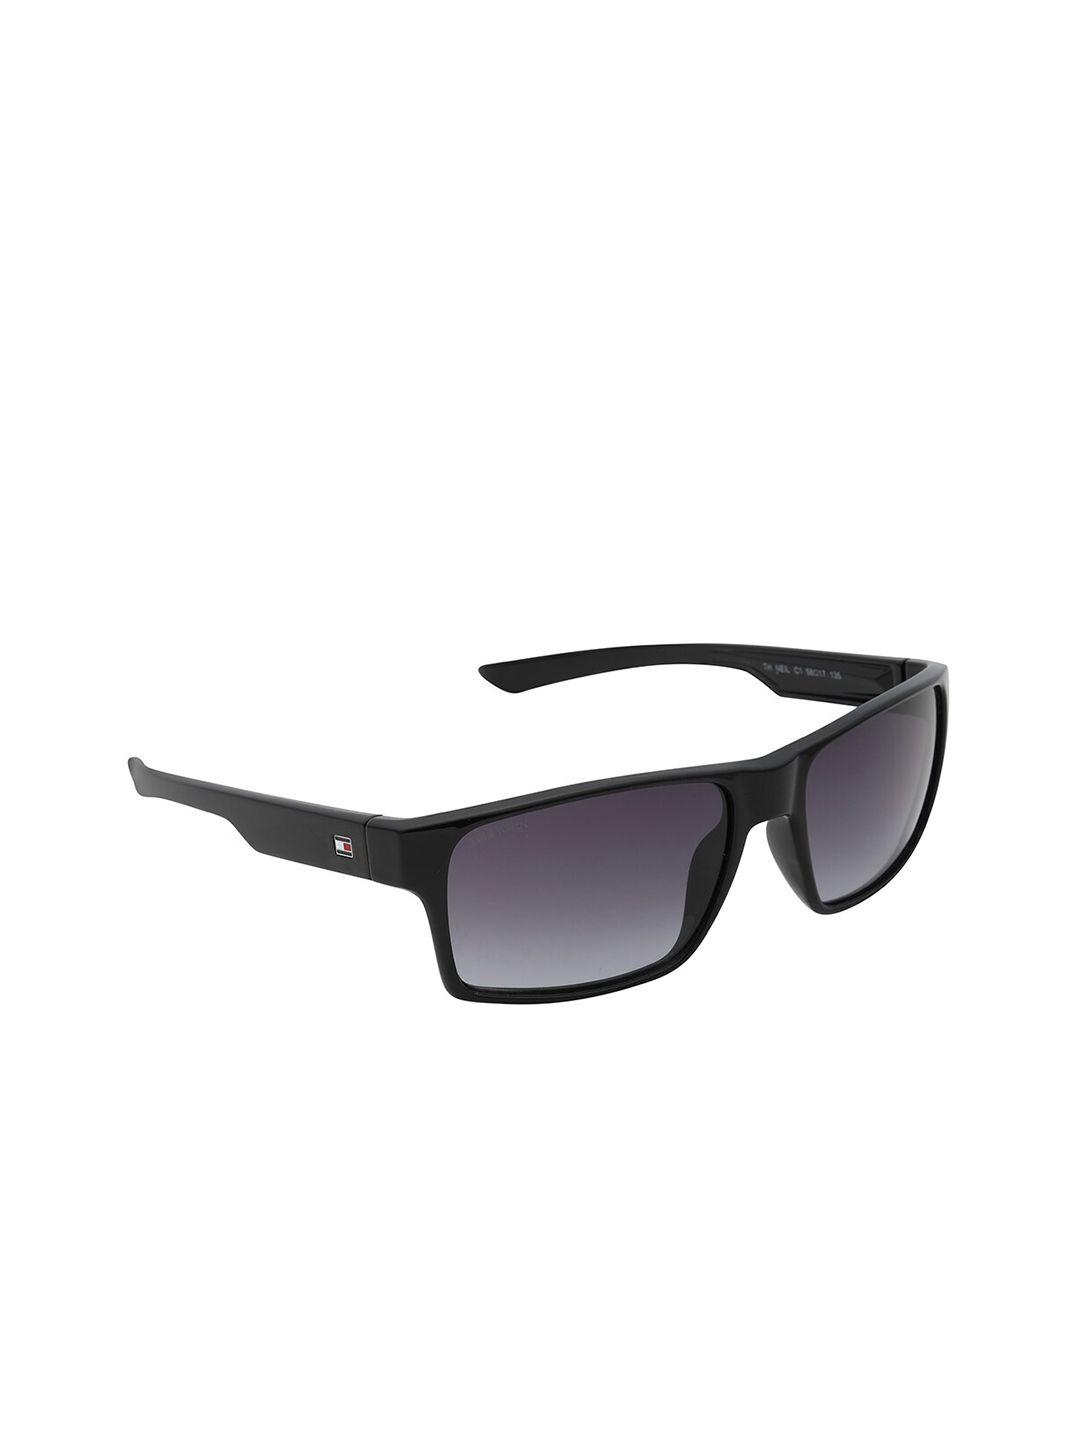 tommy-hilfiger-men-grey-lens-&-black-rectangle-sunglasses-with-uv-protected-lens